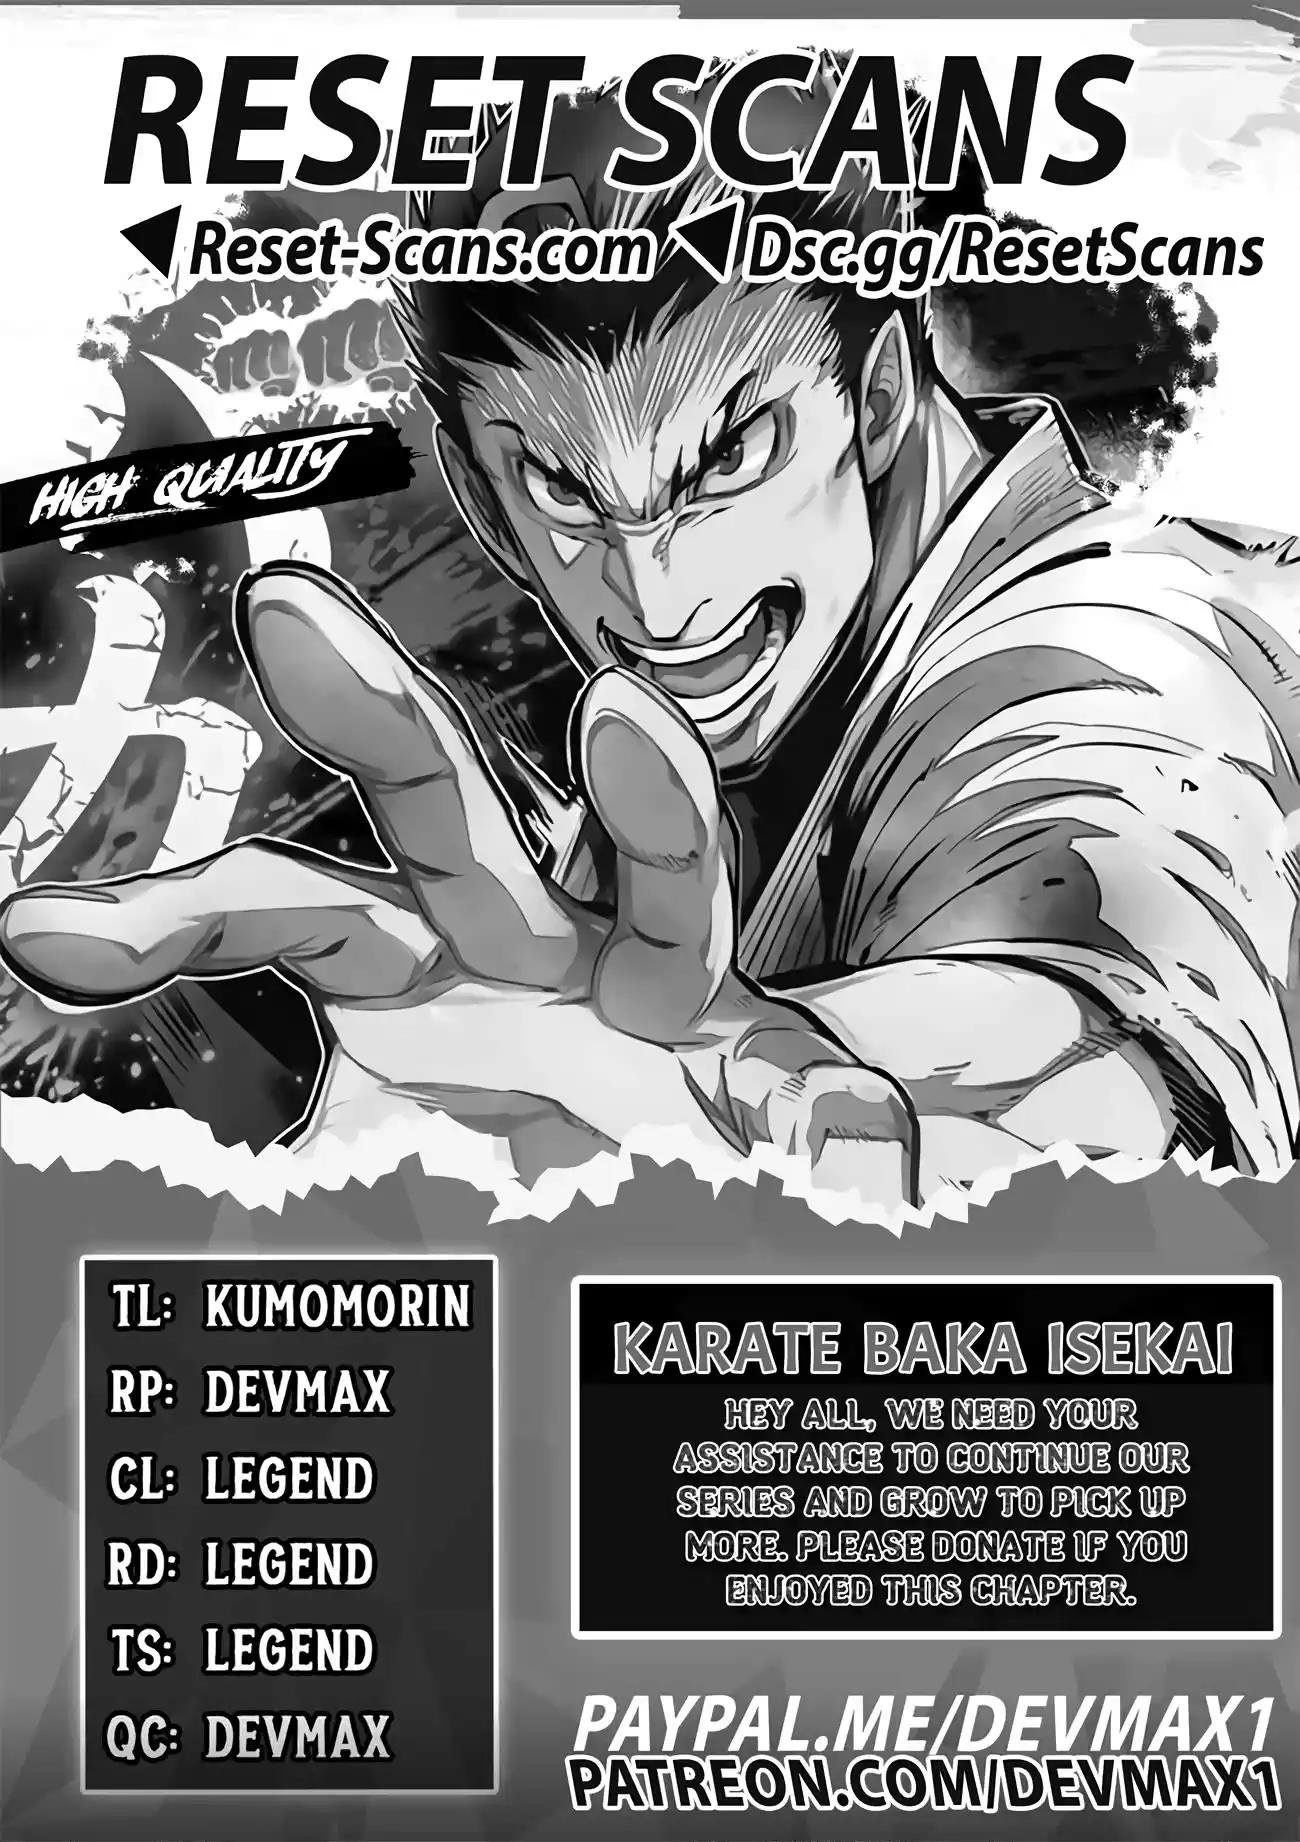 Karate Baka Isekai - Page 1